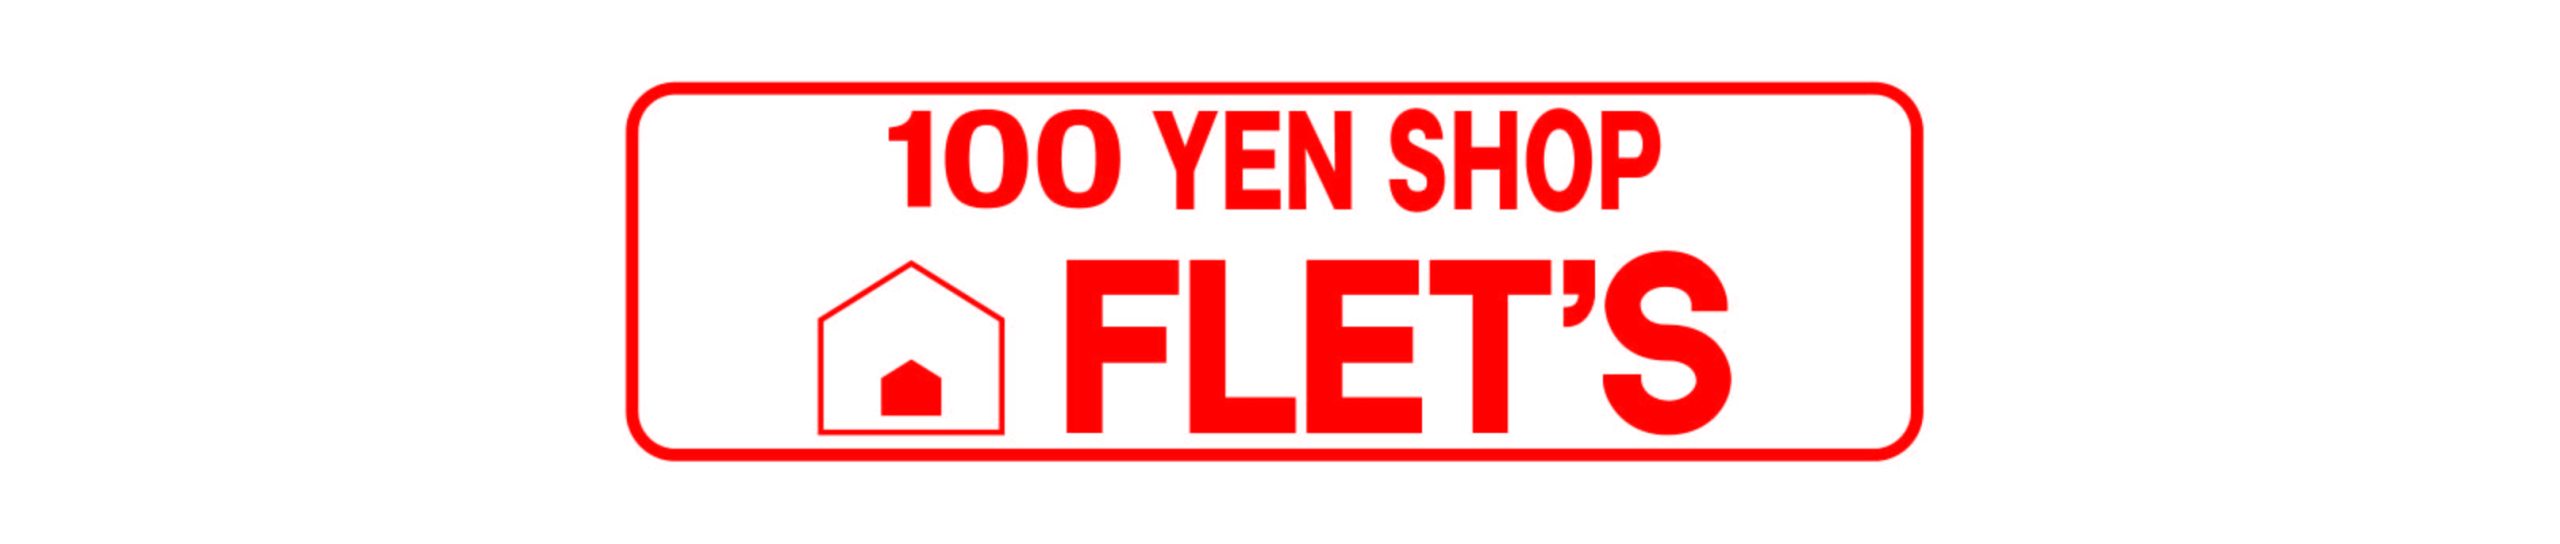 FLET’S（フレッツ）・百圓領事館は、株式会社ワッツが運営する100円ショップです。<br />
